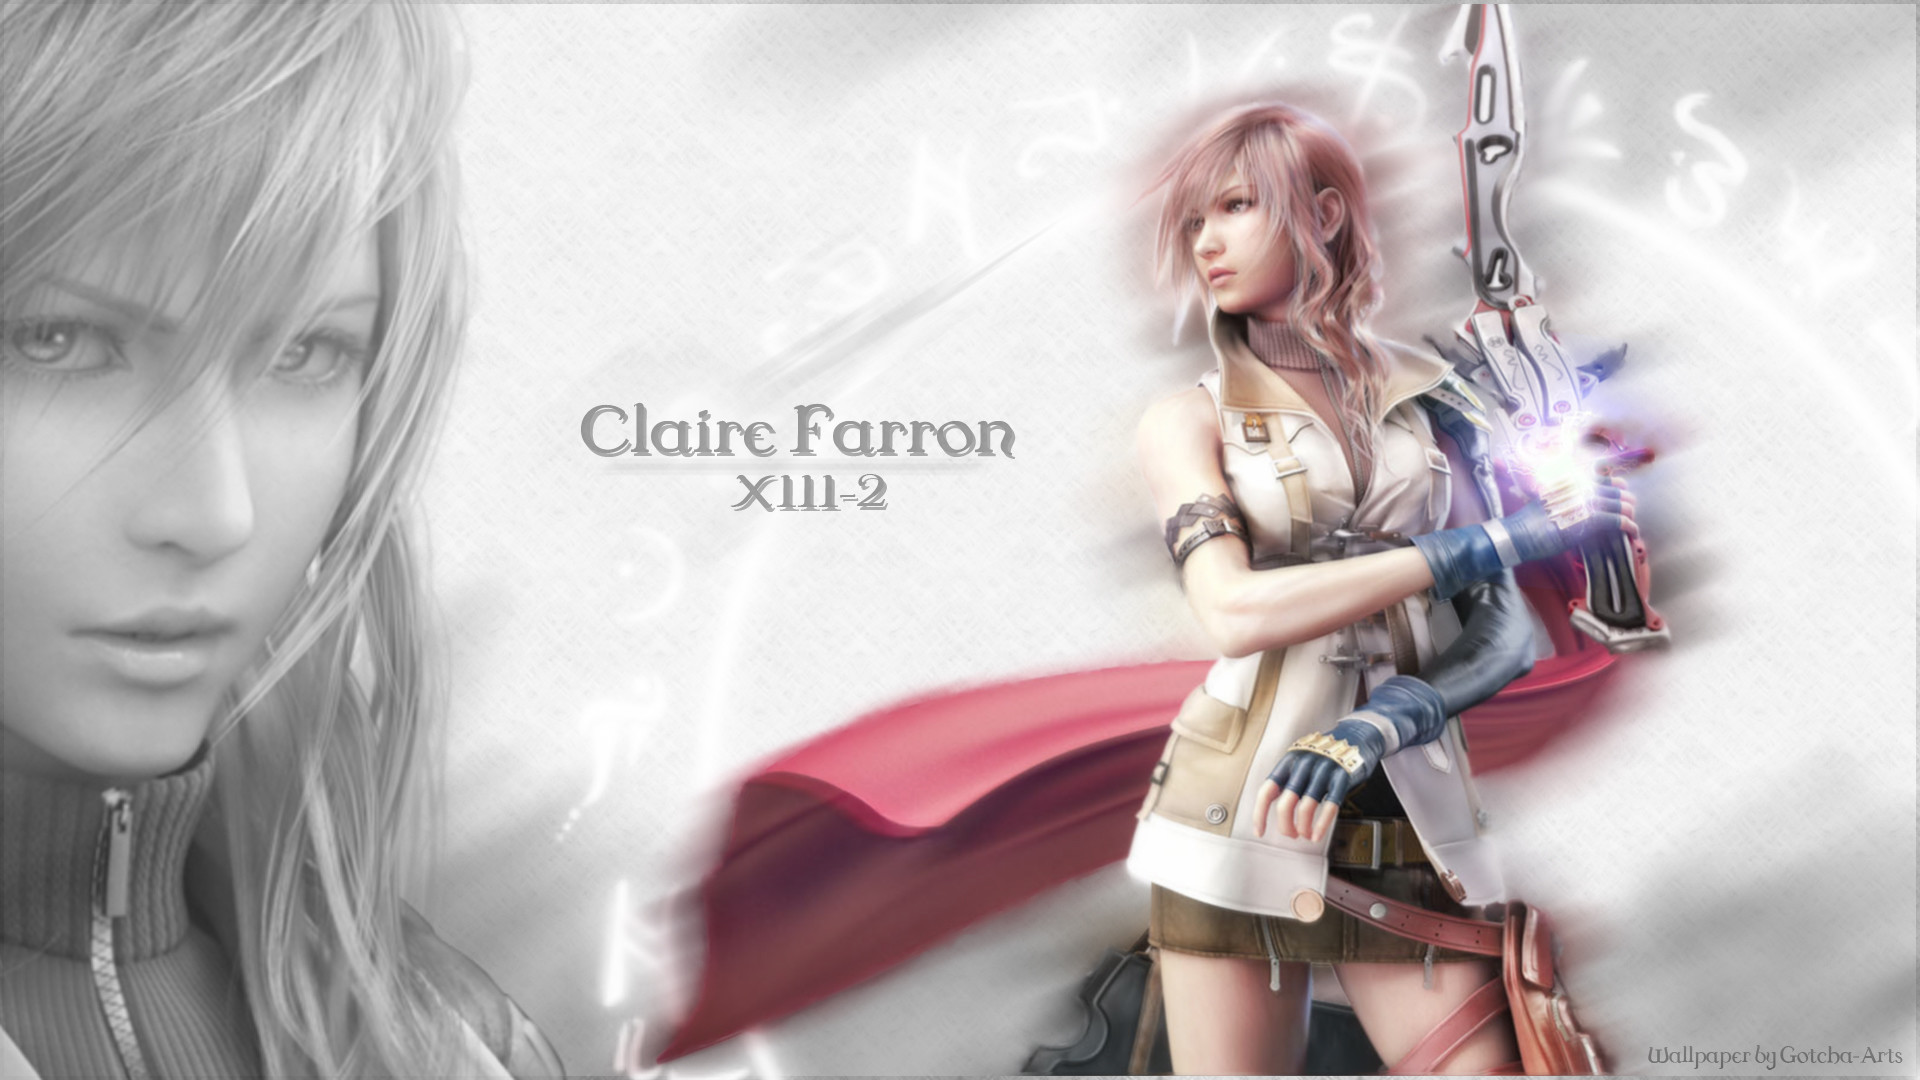 1920x1080 ... Final Fantasy Wallpaper Claire Farron (Lightning) by corki-gfx